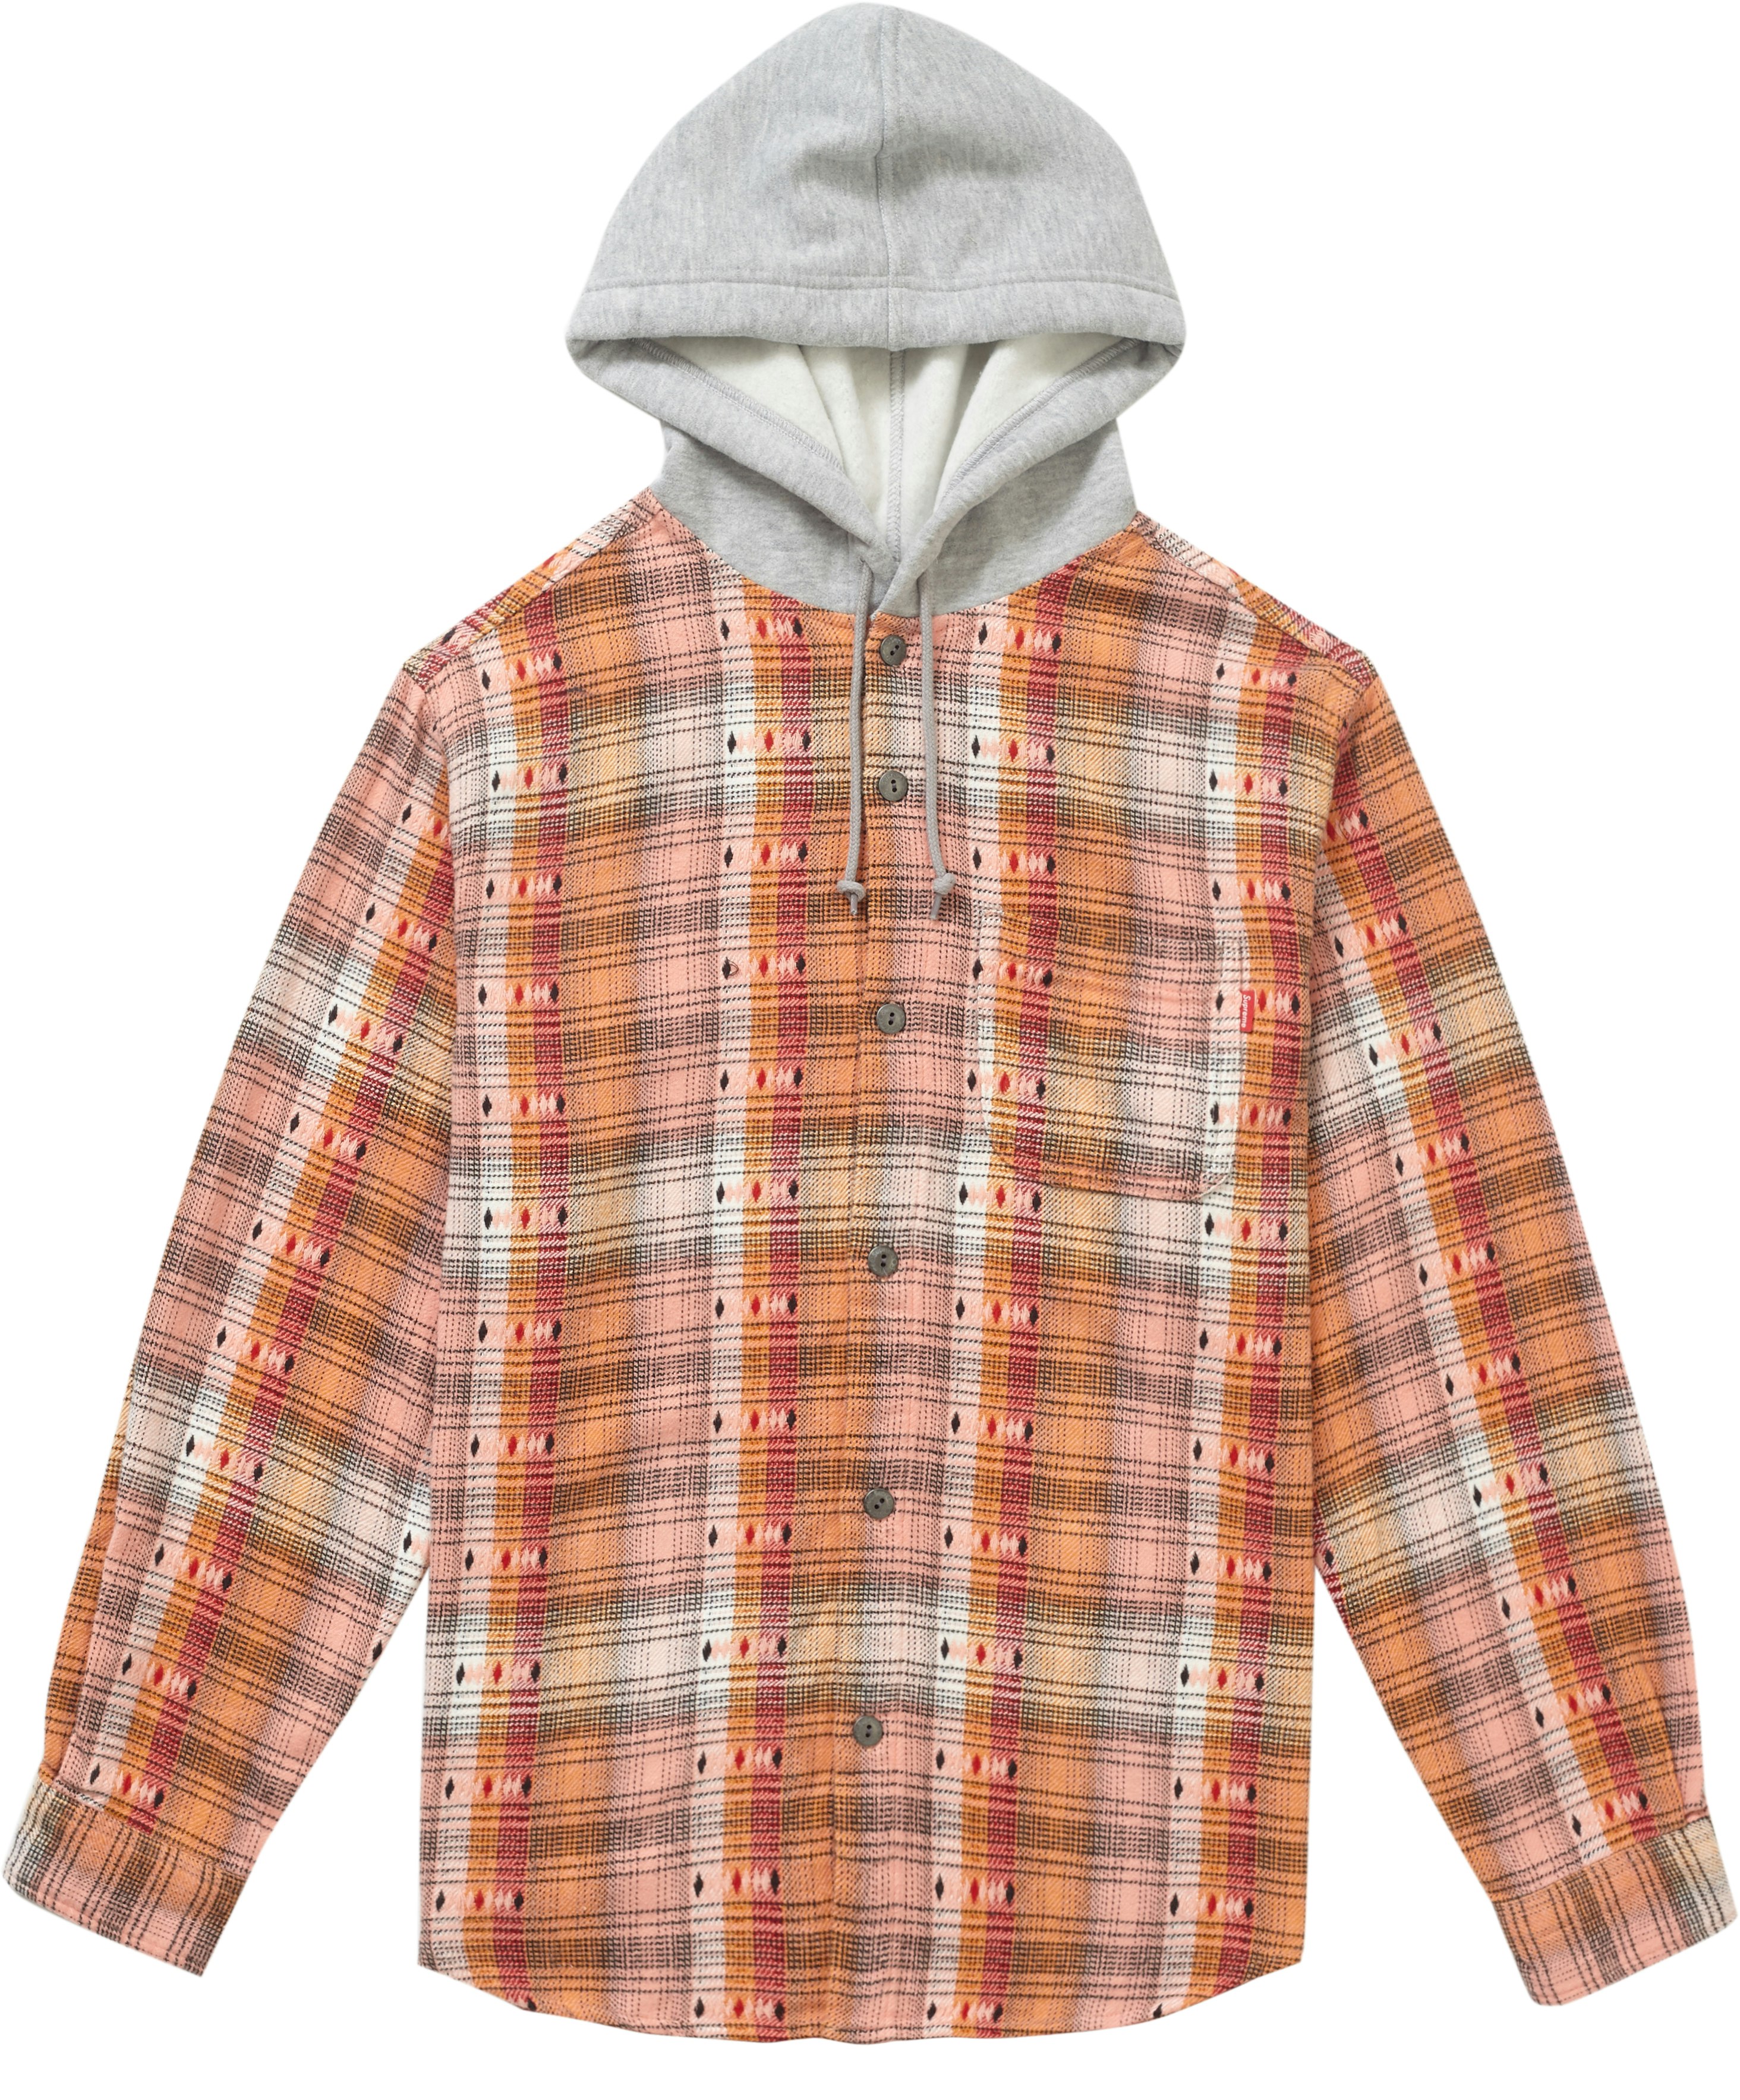 【M】18aw Hooded Jacquard Flannel Shirt